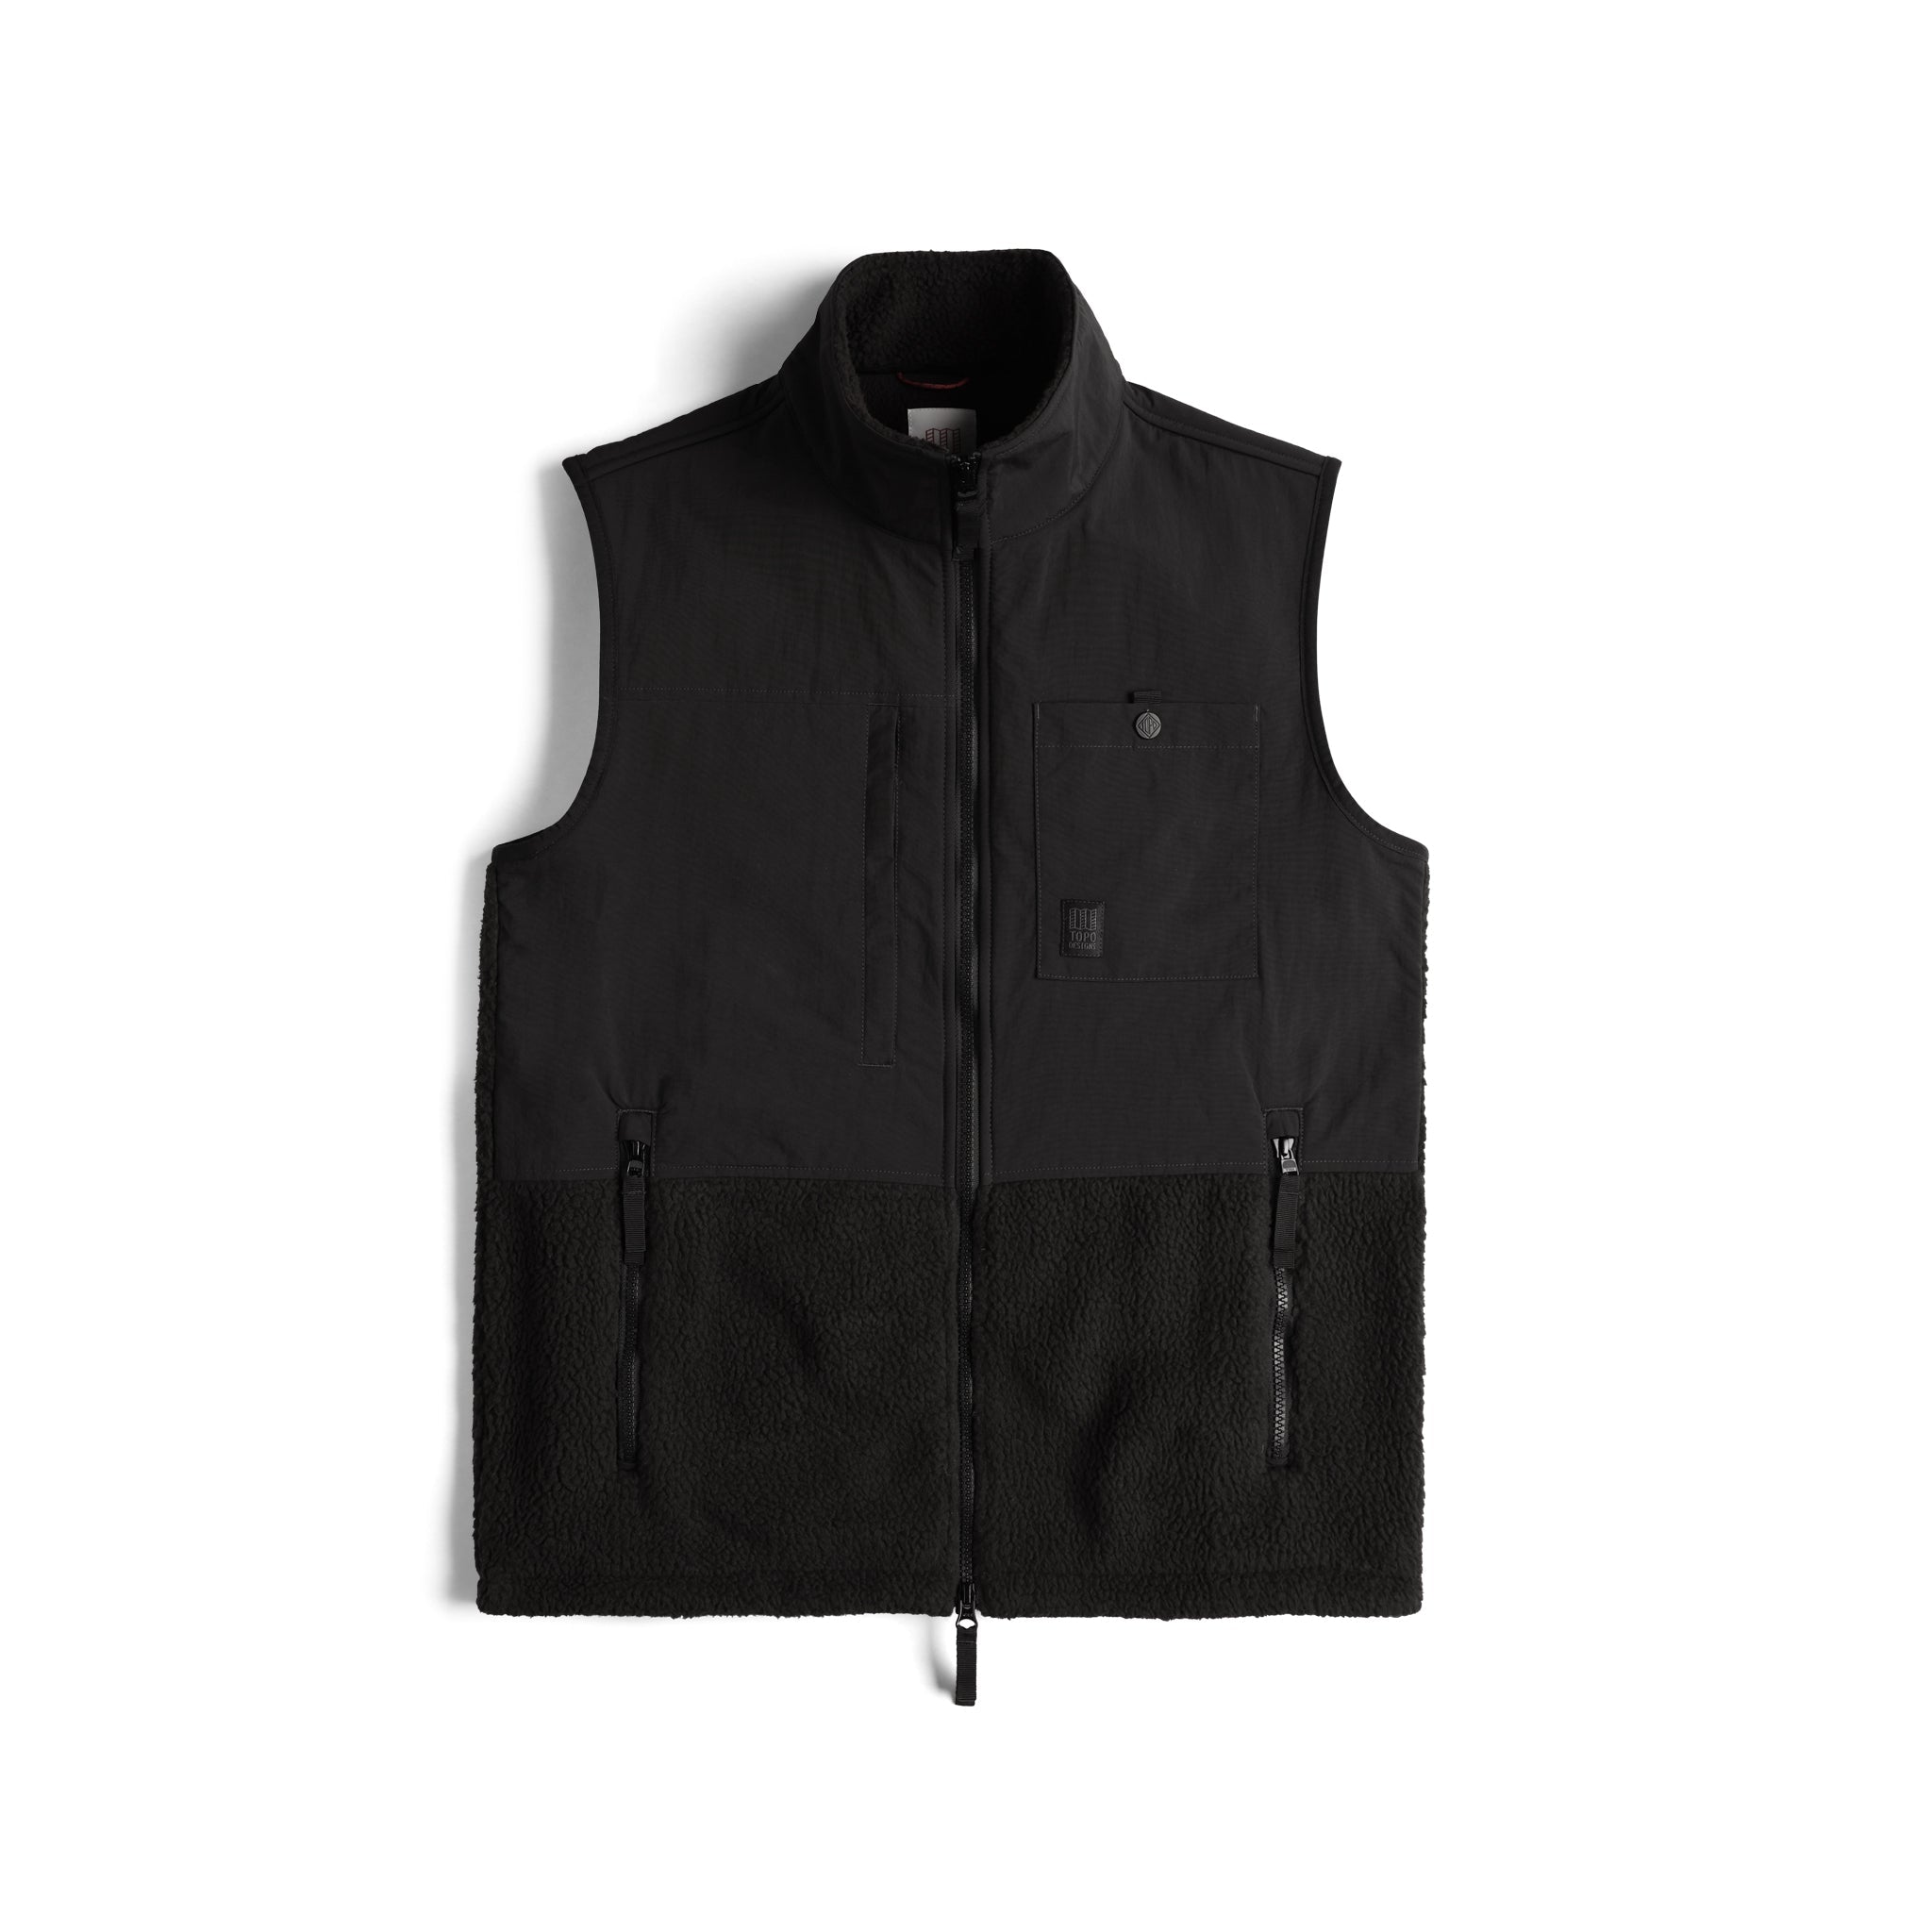 Subalpine fleece vest in "Black"